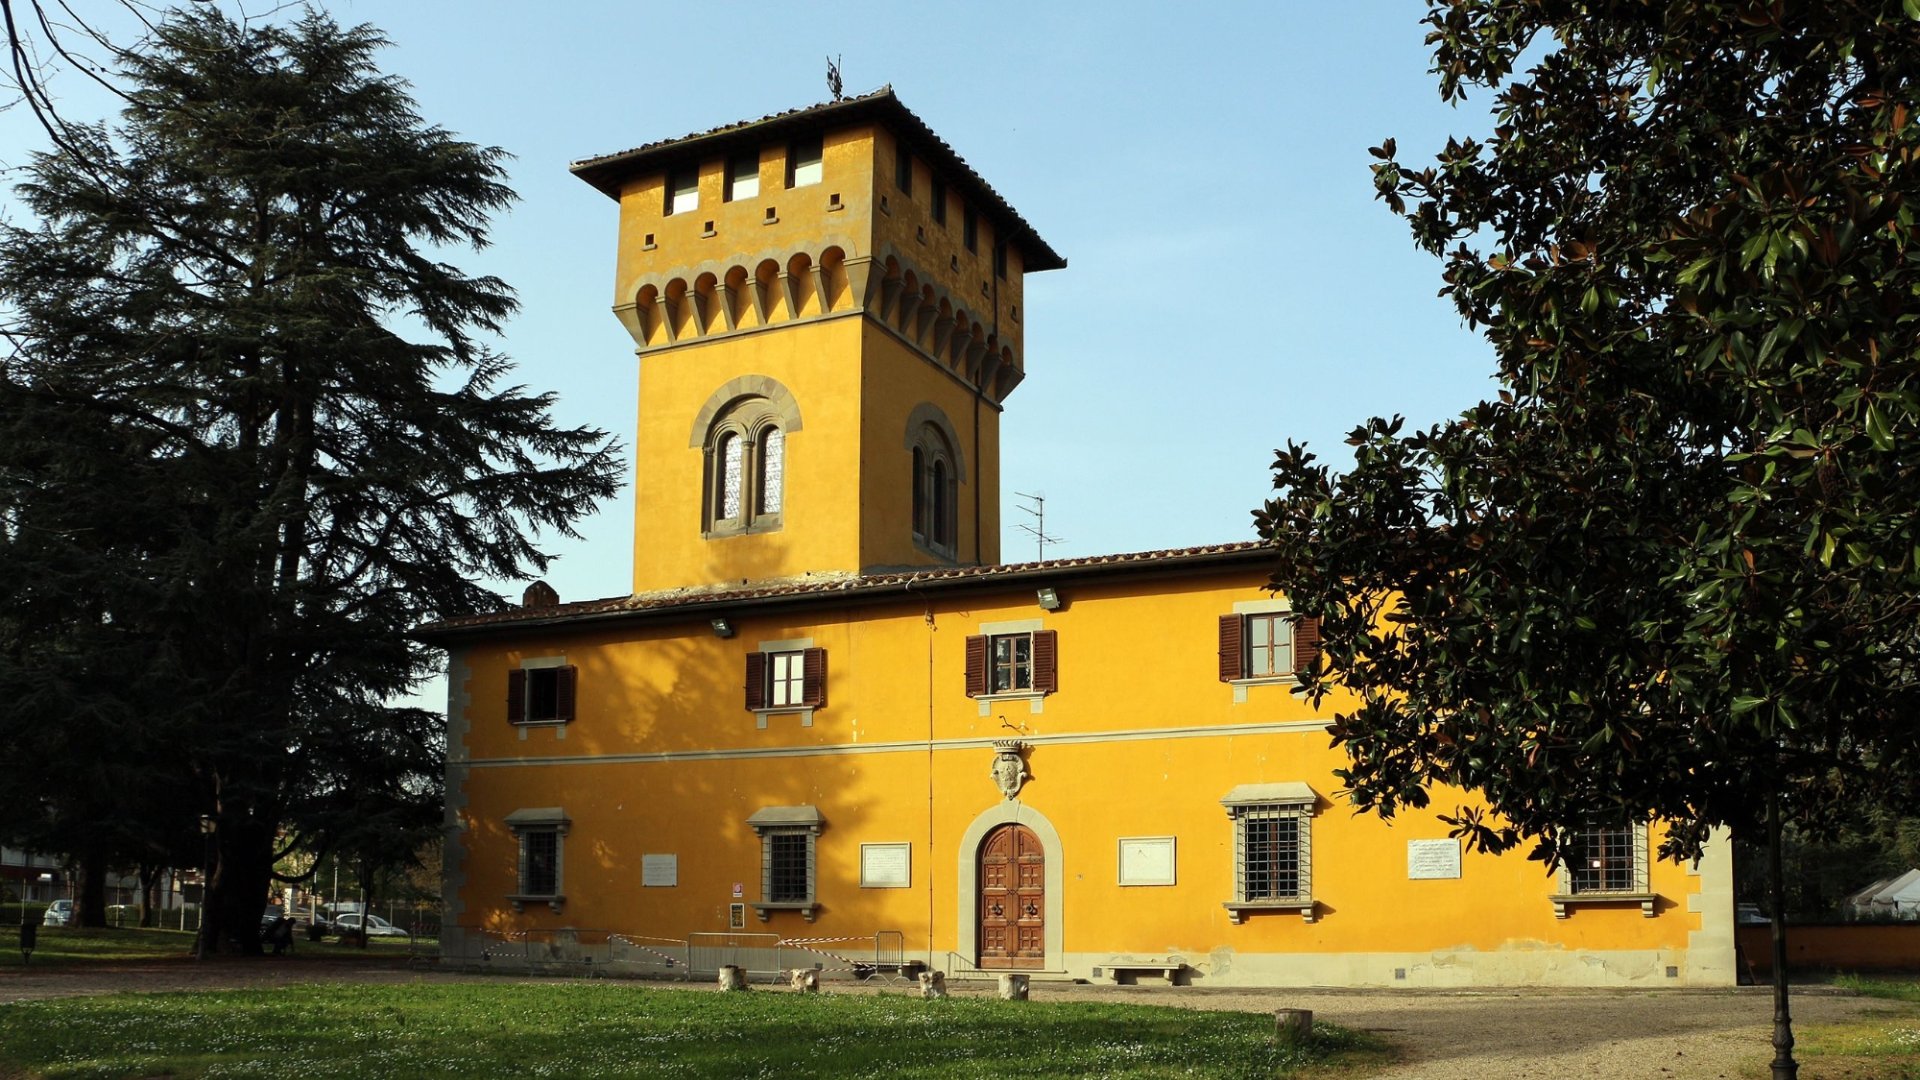 Villa Pecori Giraldi - Borgo San Lorenzo